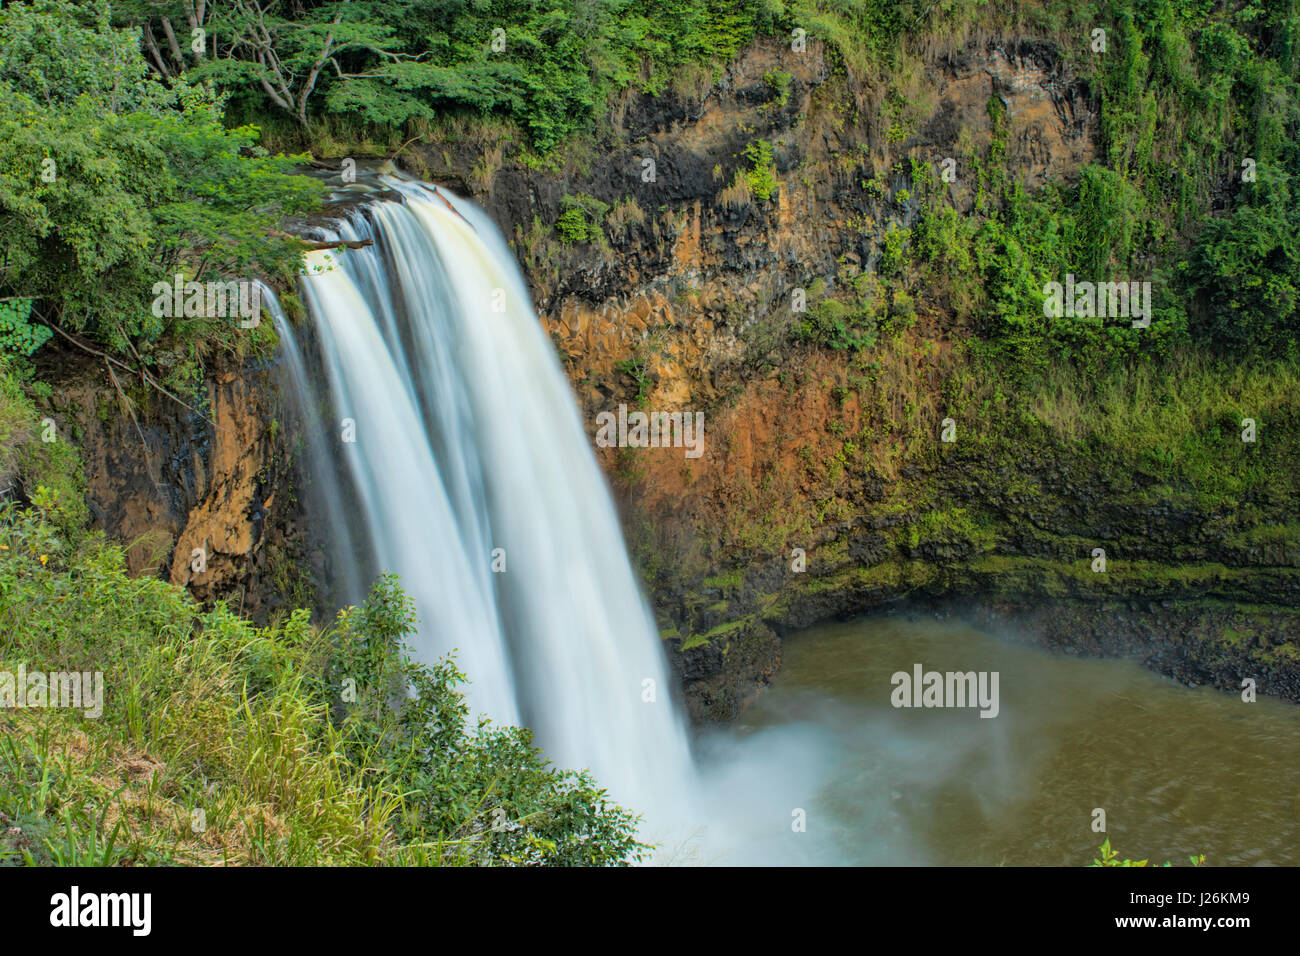 Kauai Hawaii Wailua Falls famous TV falls with water flow into lake tourist attraction Stock Photo